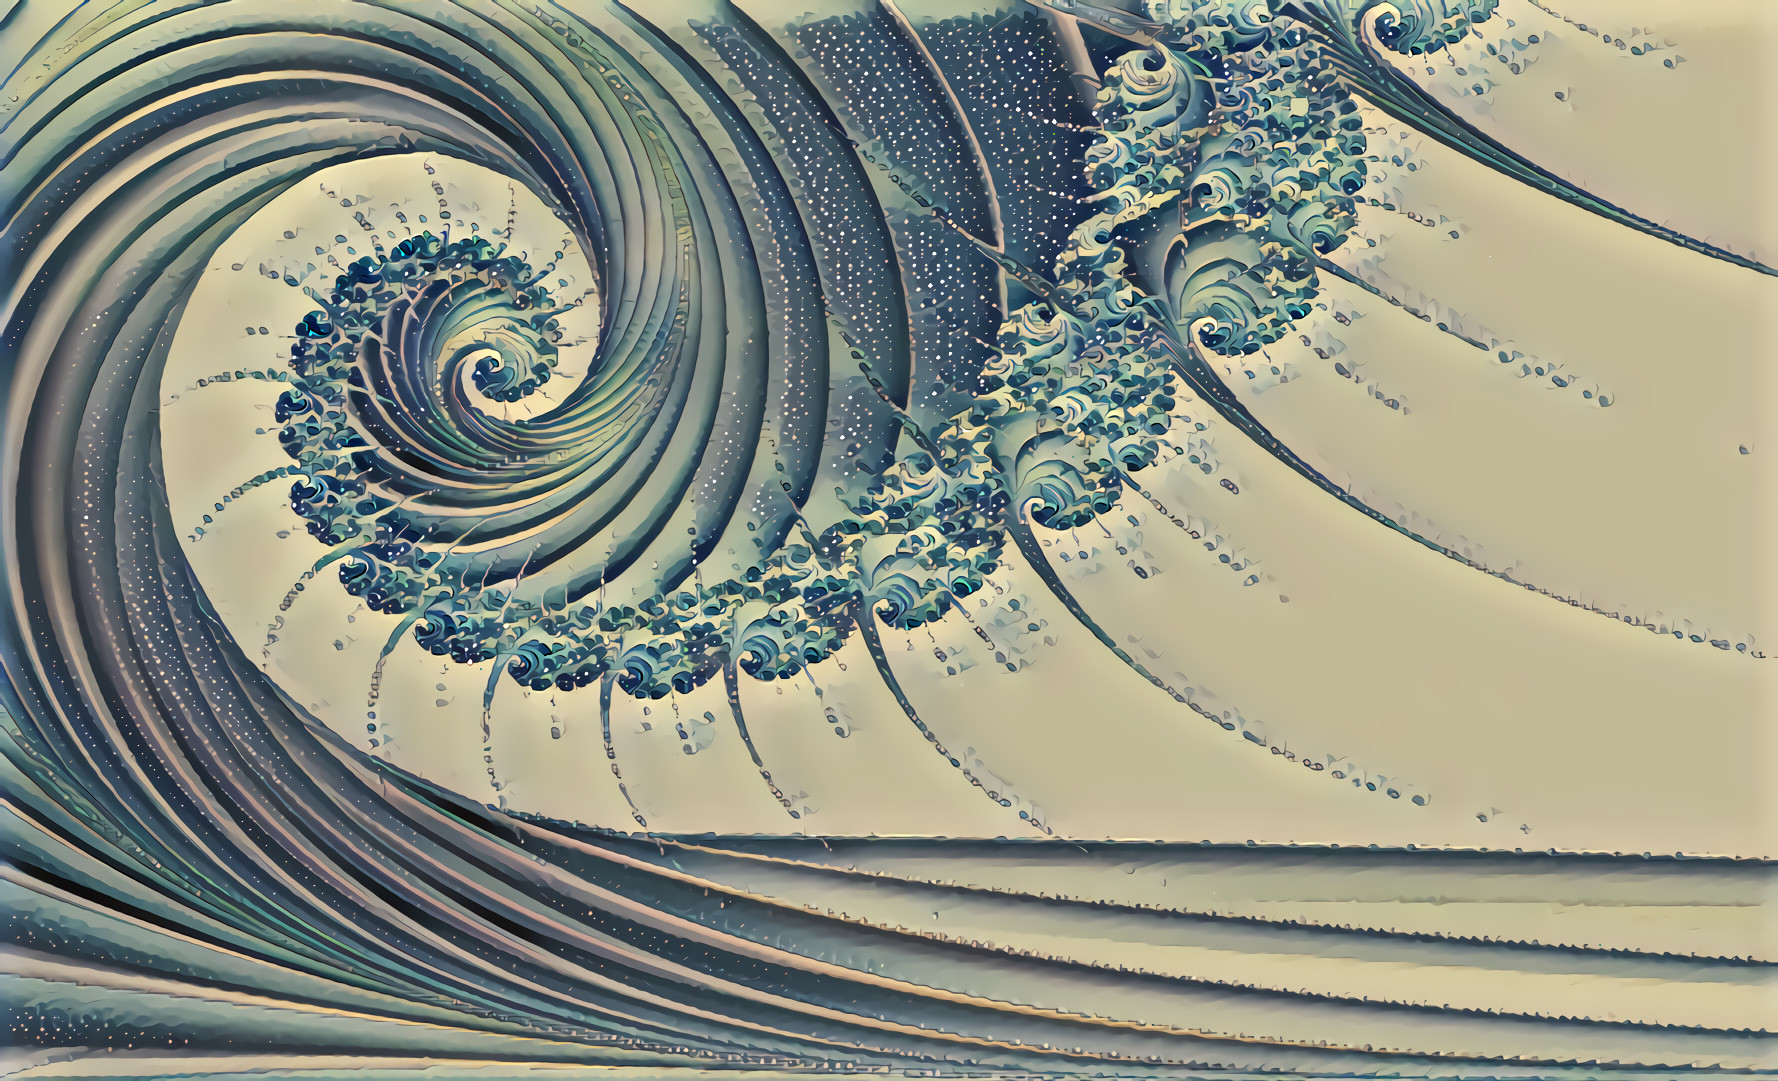 Mandelbrot's Great Wave in Hokasai stylee